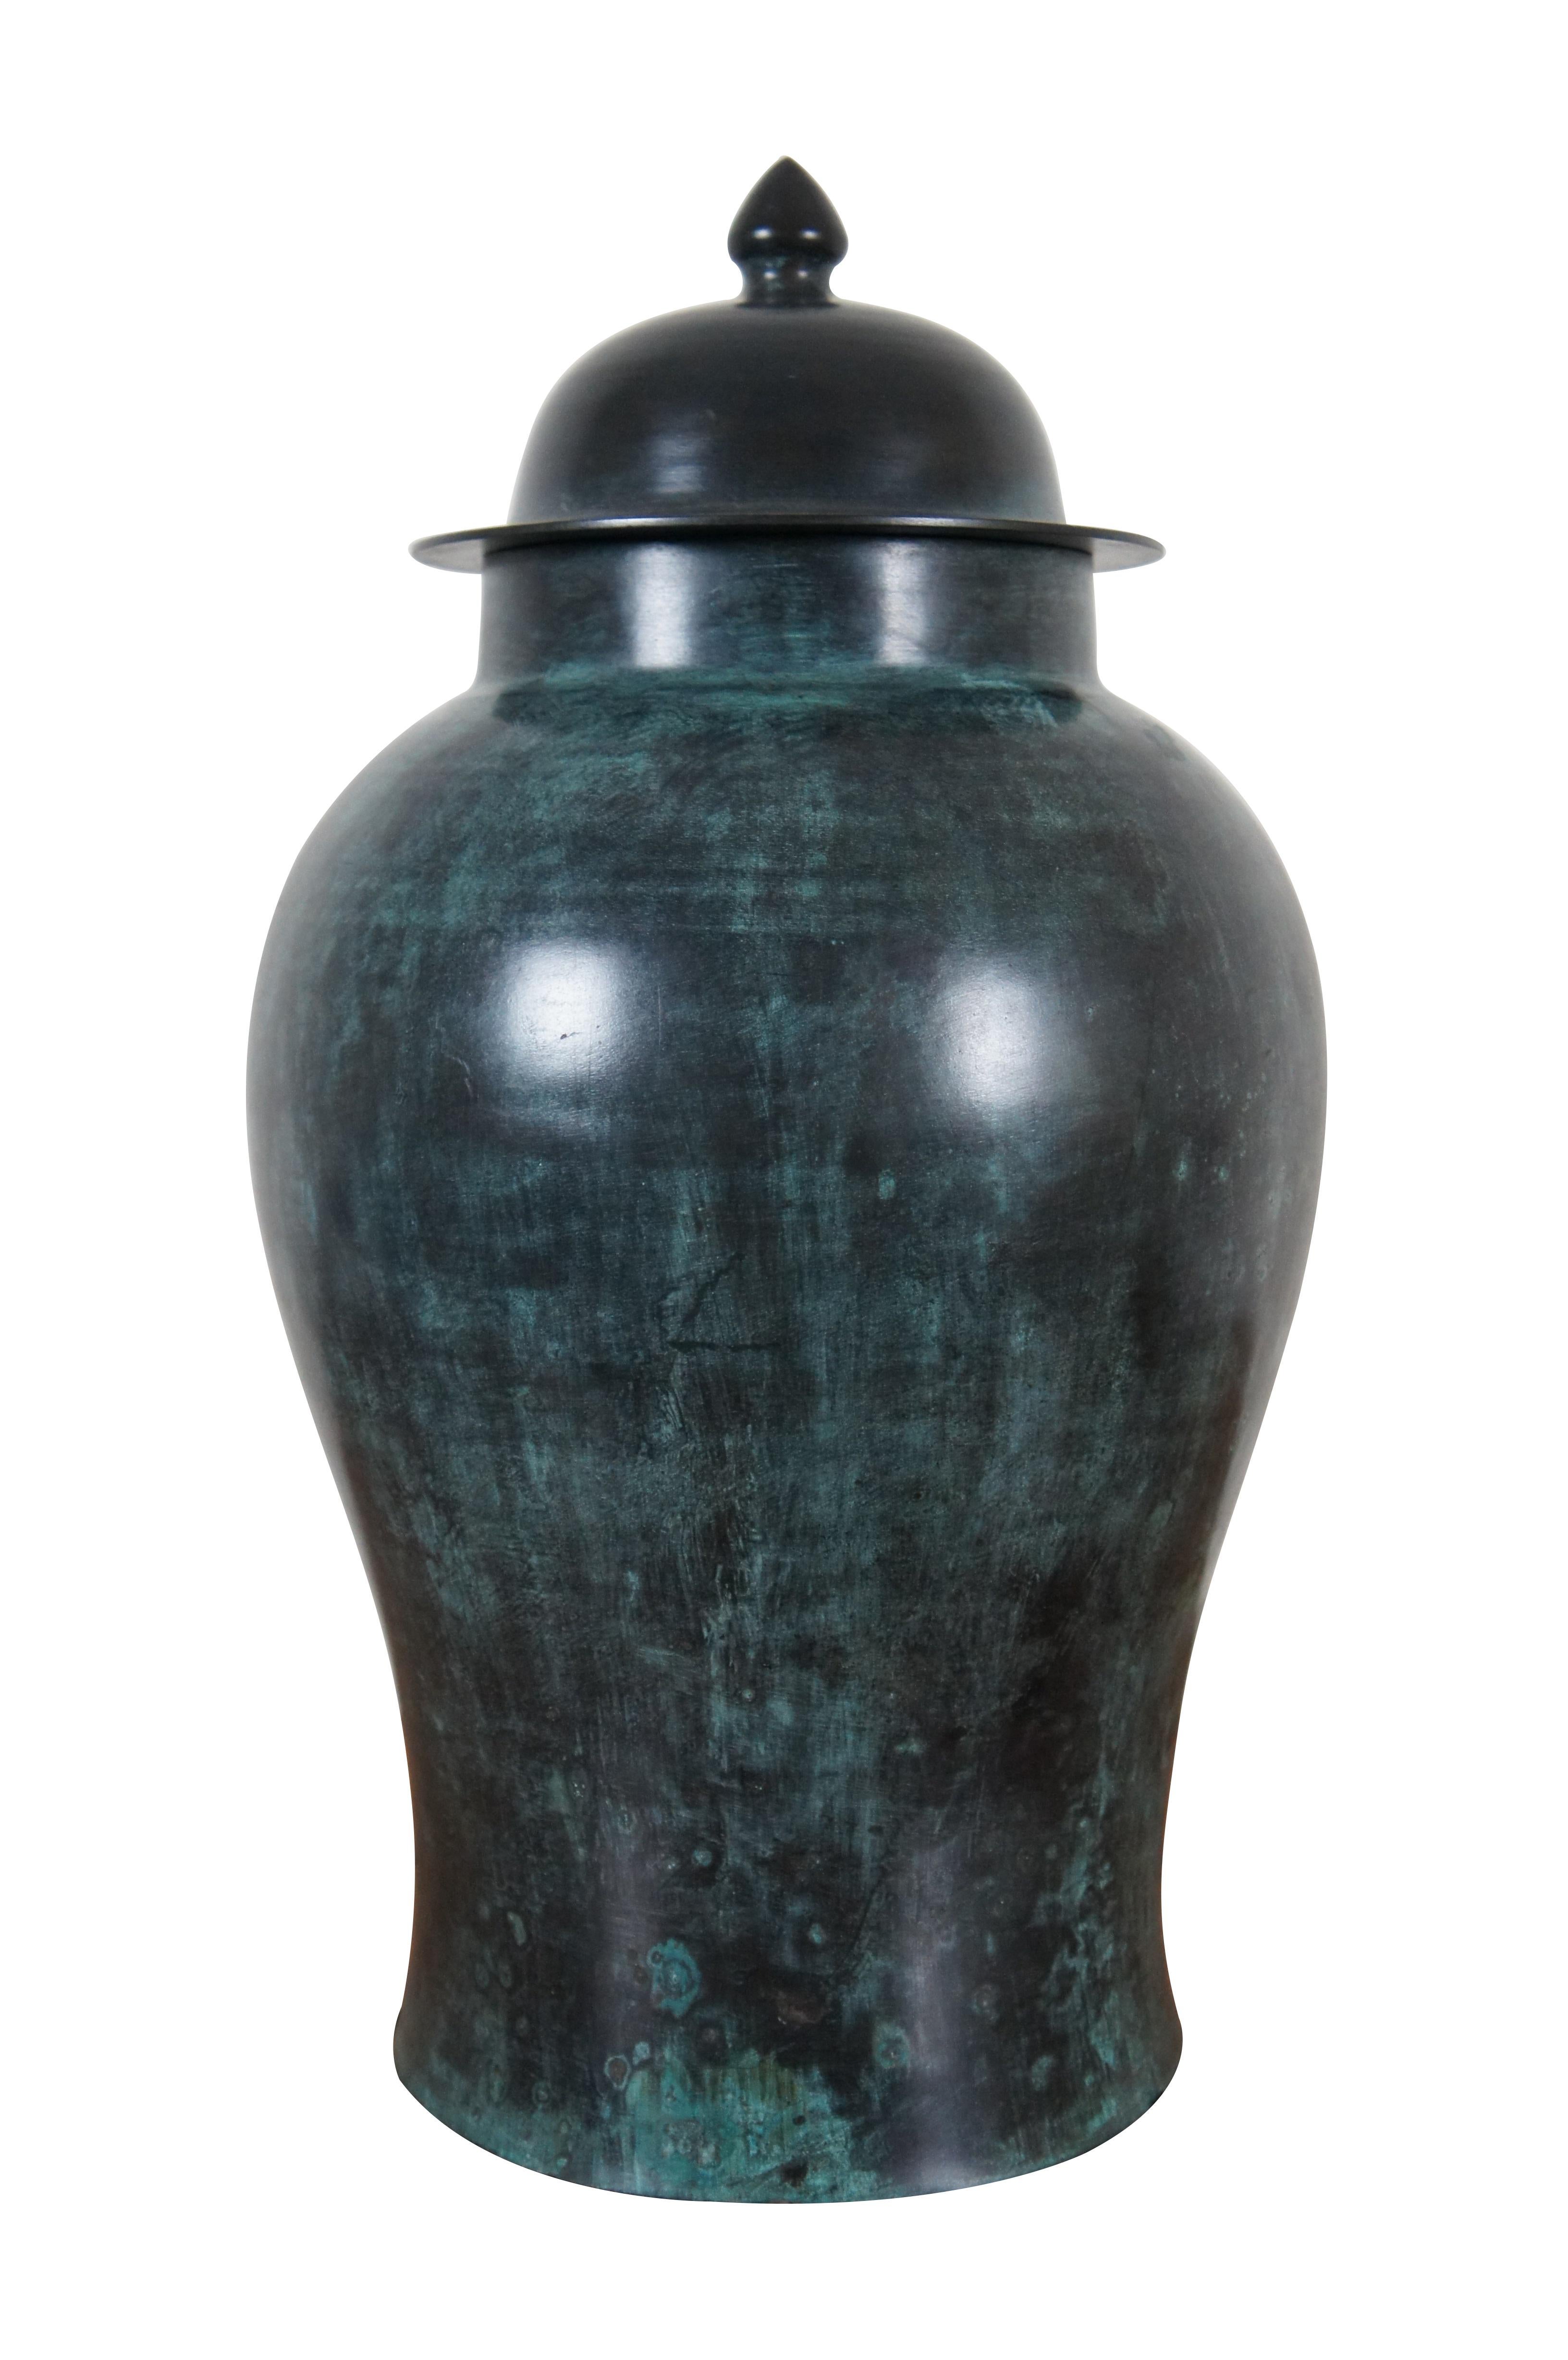 British Colonial Maitland Smith Heavy Bronze Lidded Mantel Urn Vase Ginger Jar 19